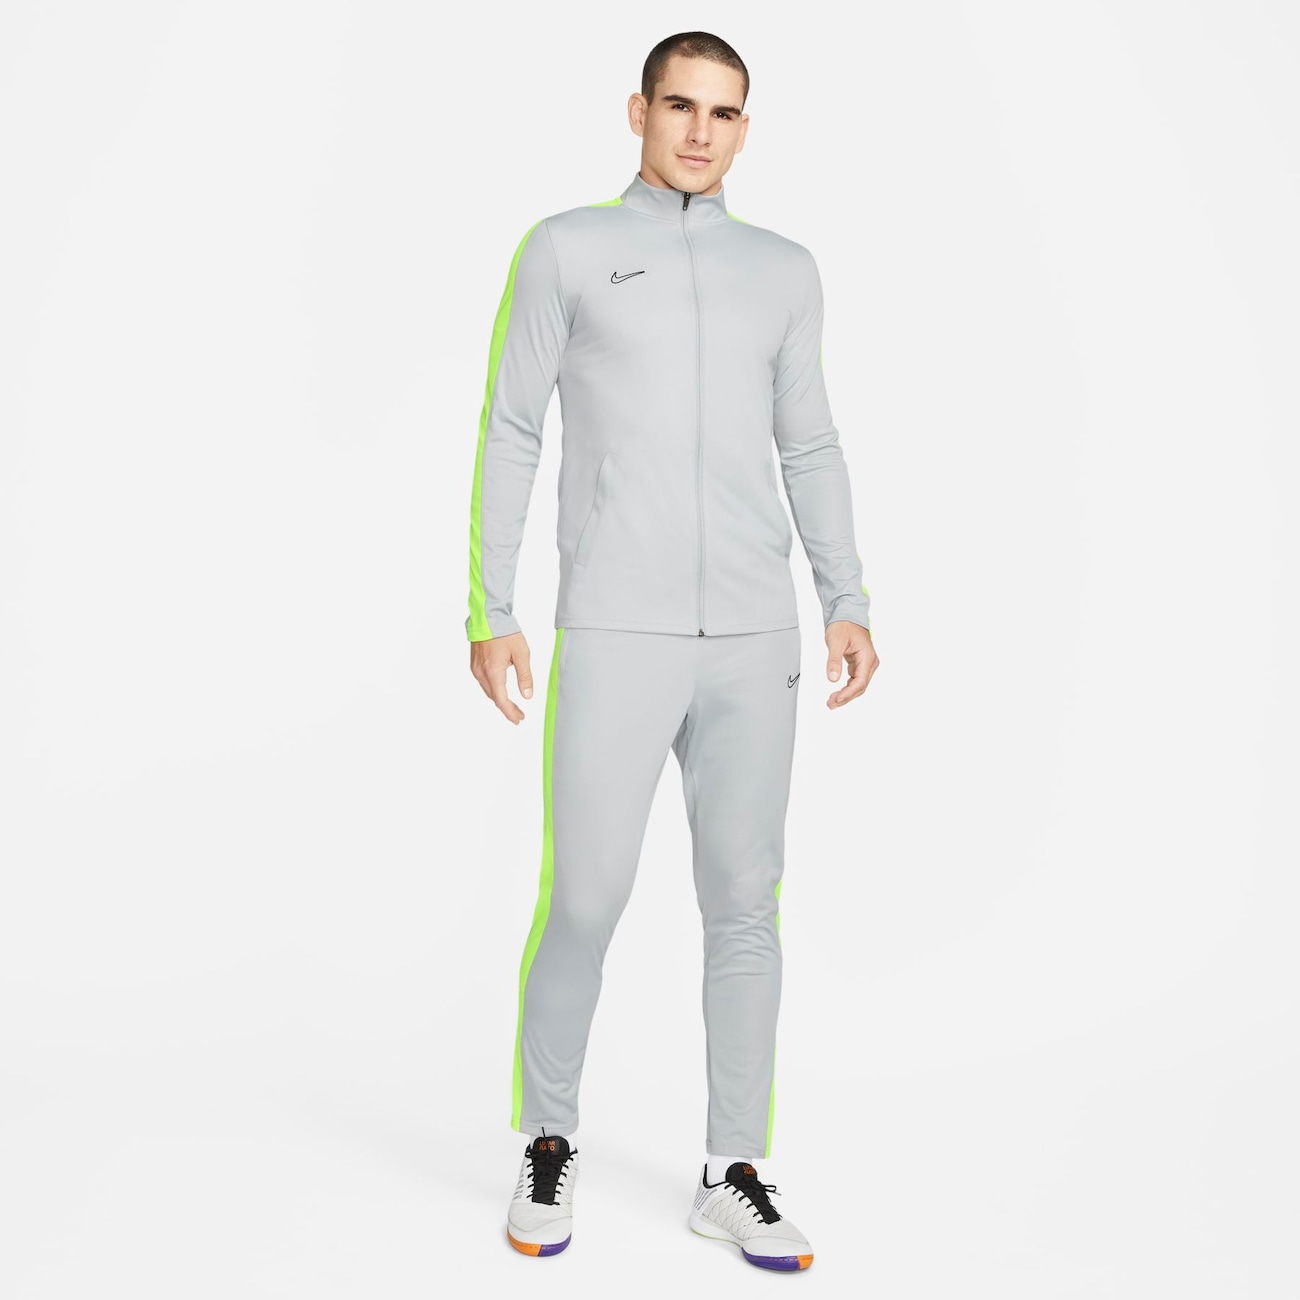 Agasalho Nike Dri-FIT Academy Masculino